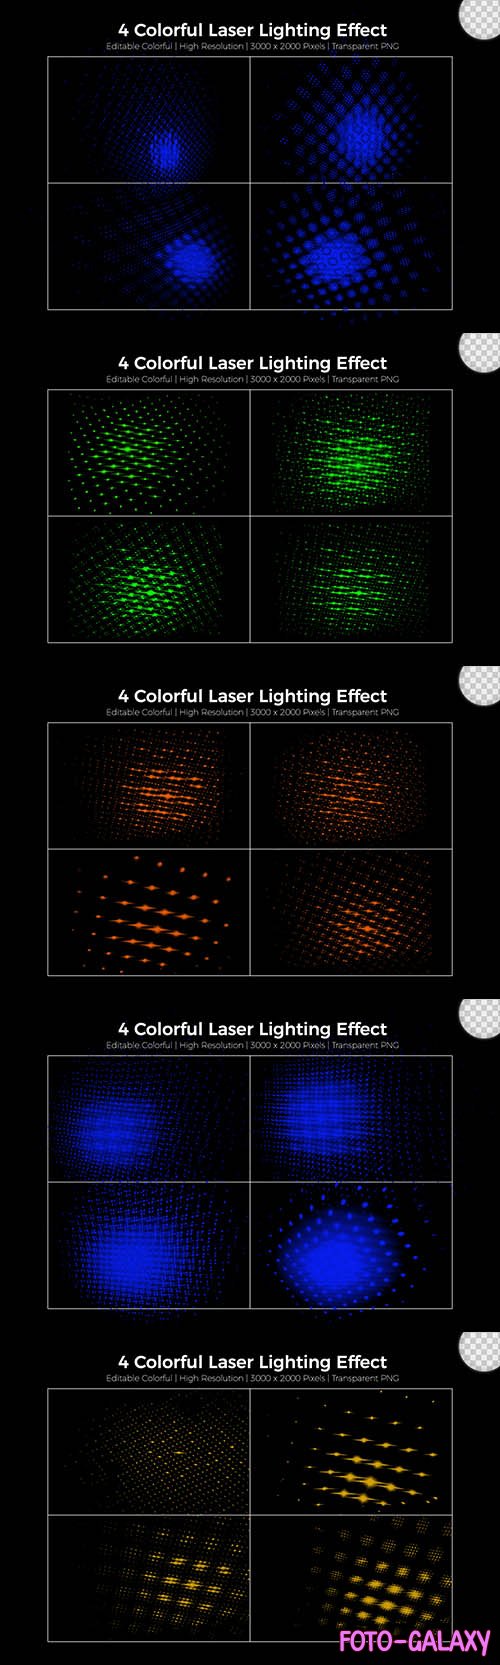 PSD realistic laser lighting effect